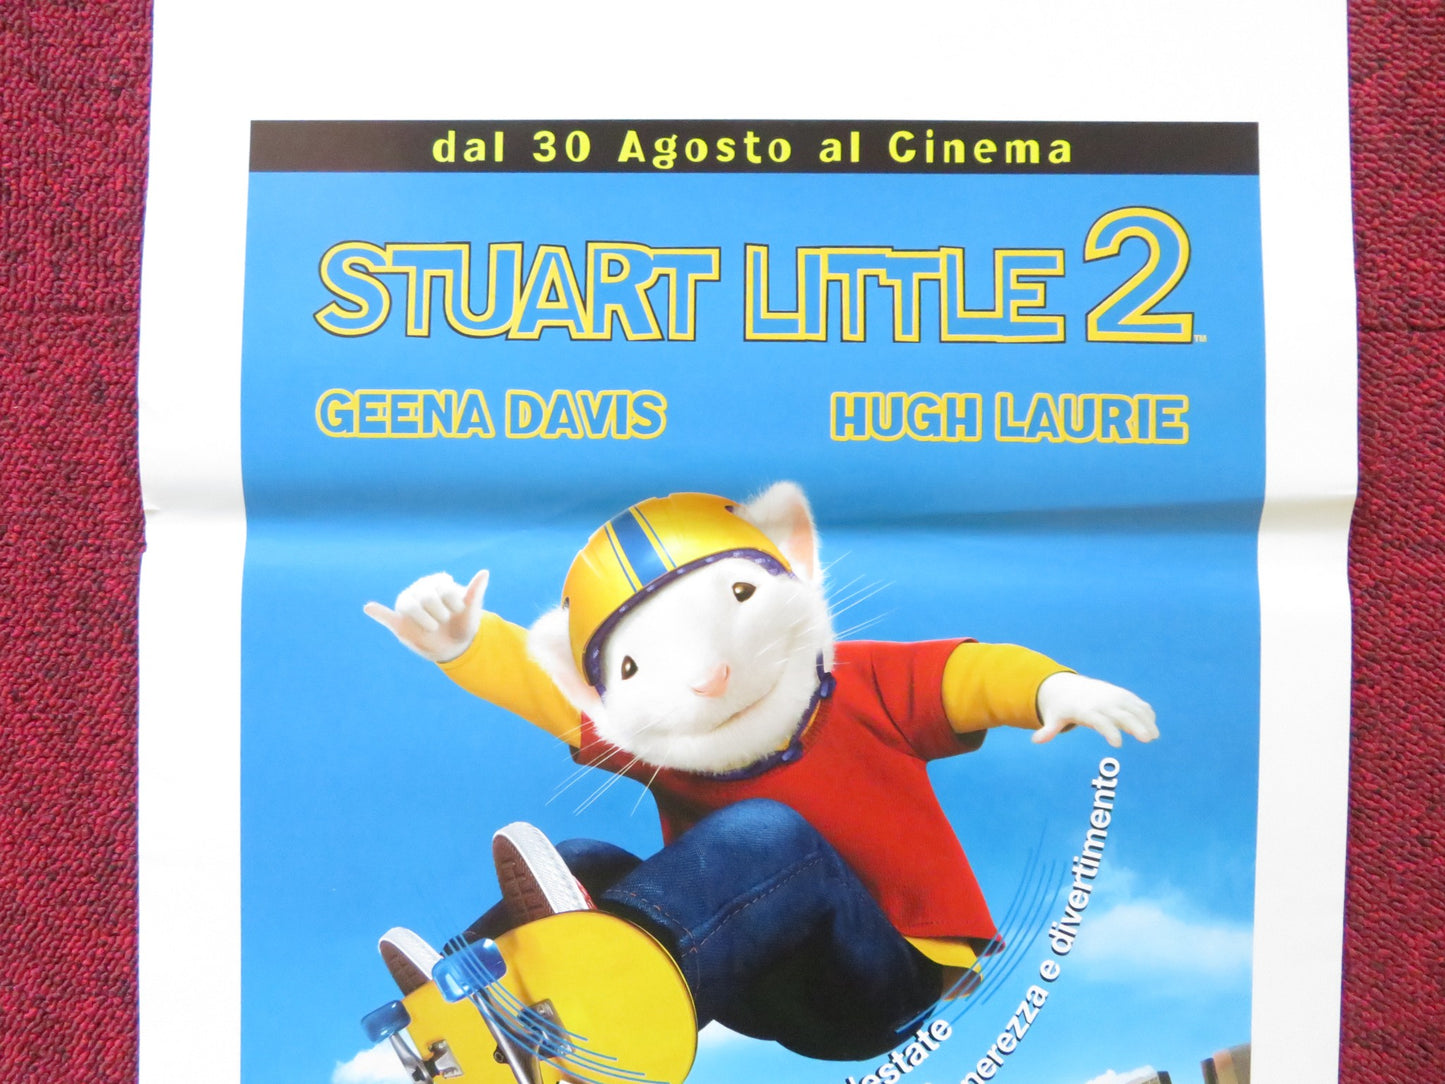 STUART LITTLE 2 ITALIAN LOCANDINA POSTER GENNA DAVIS HUGH LAURIE 2002